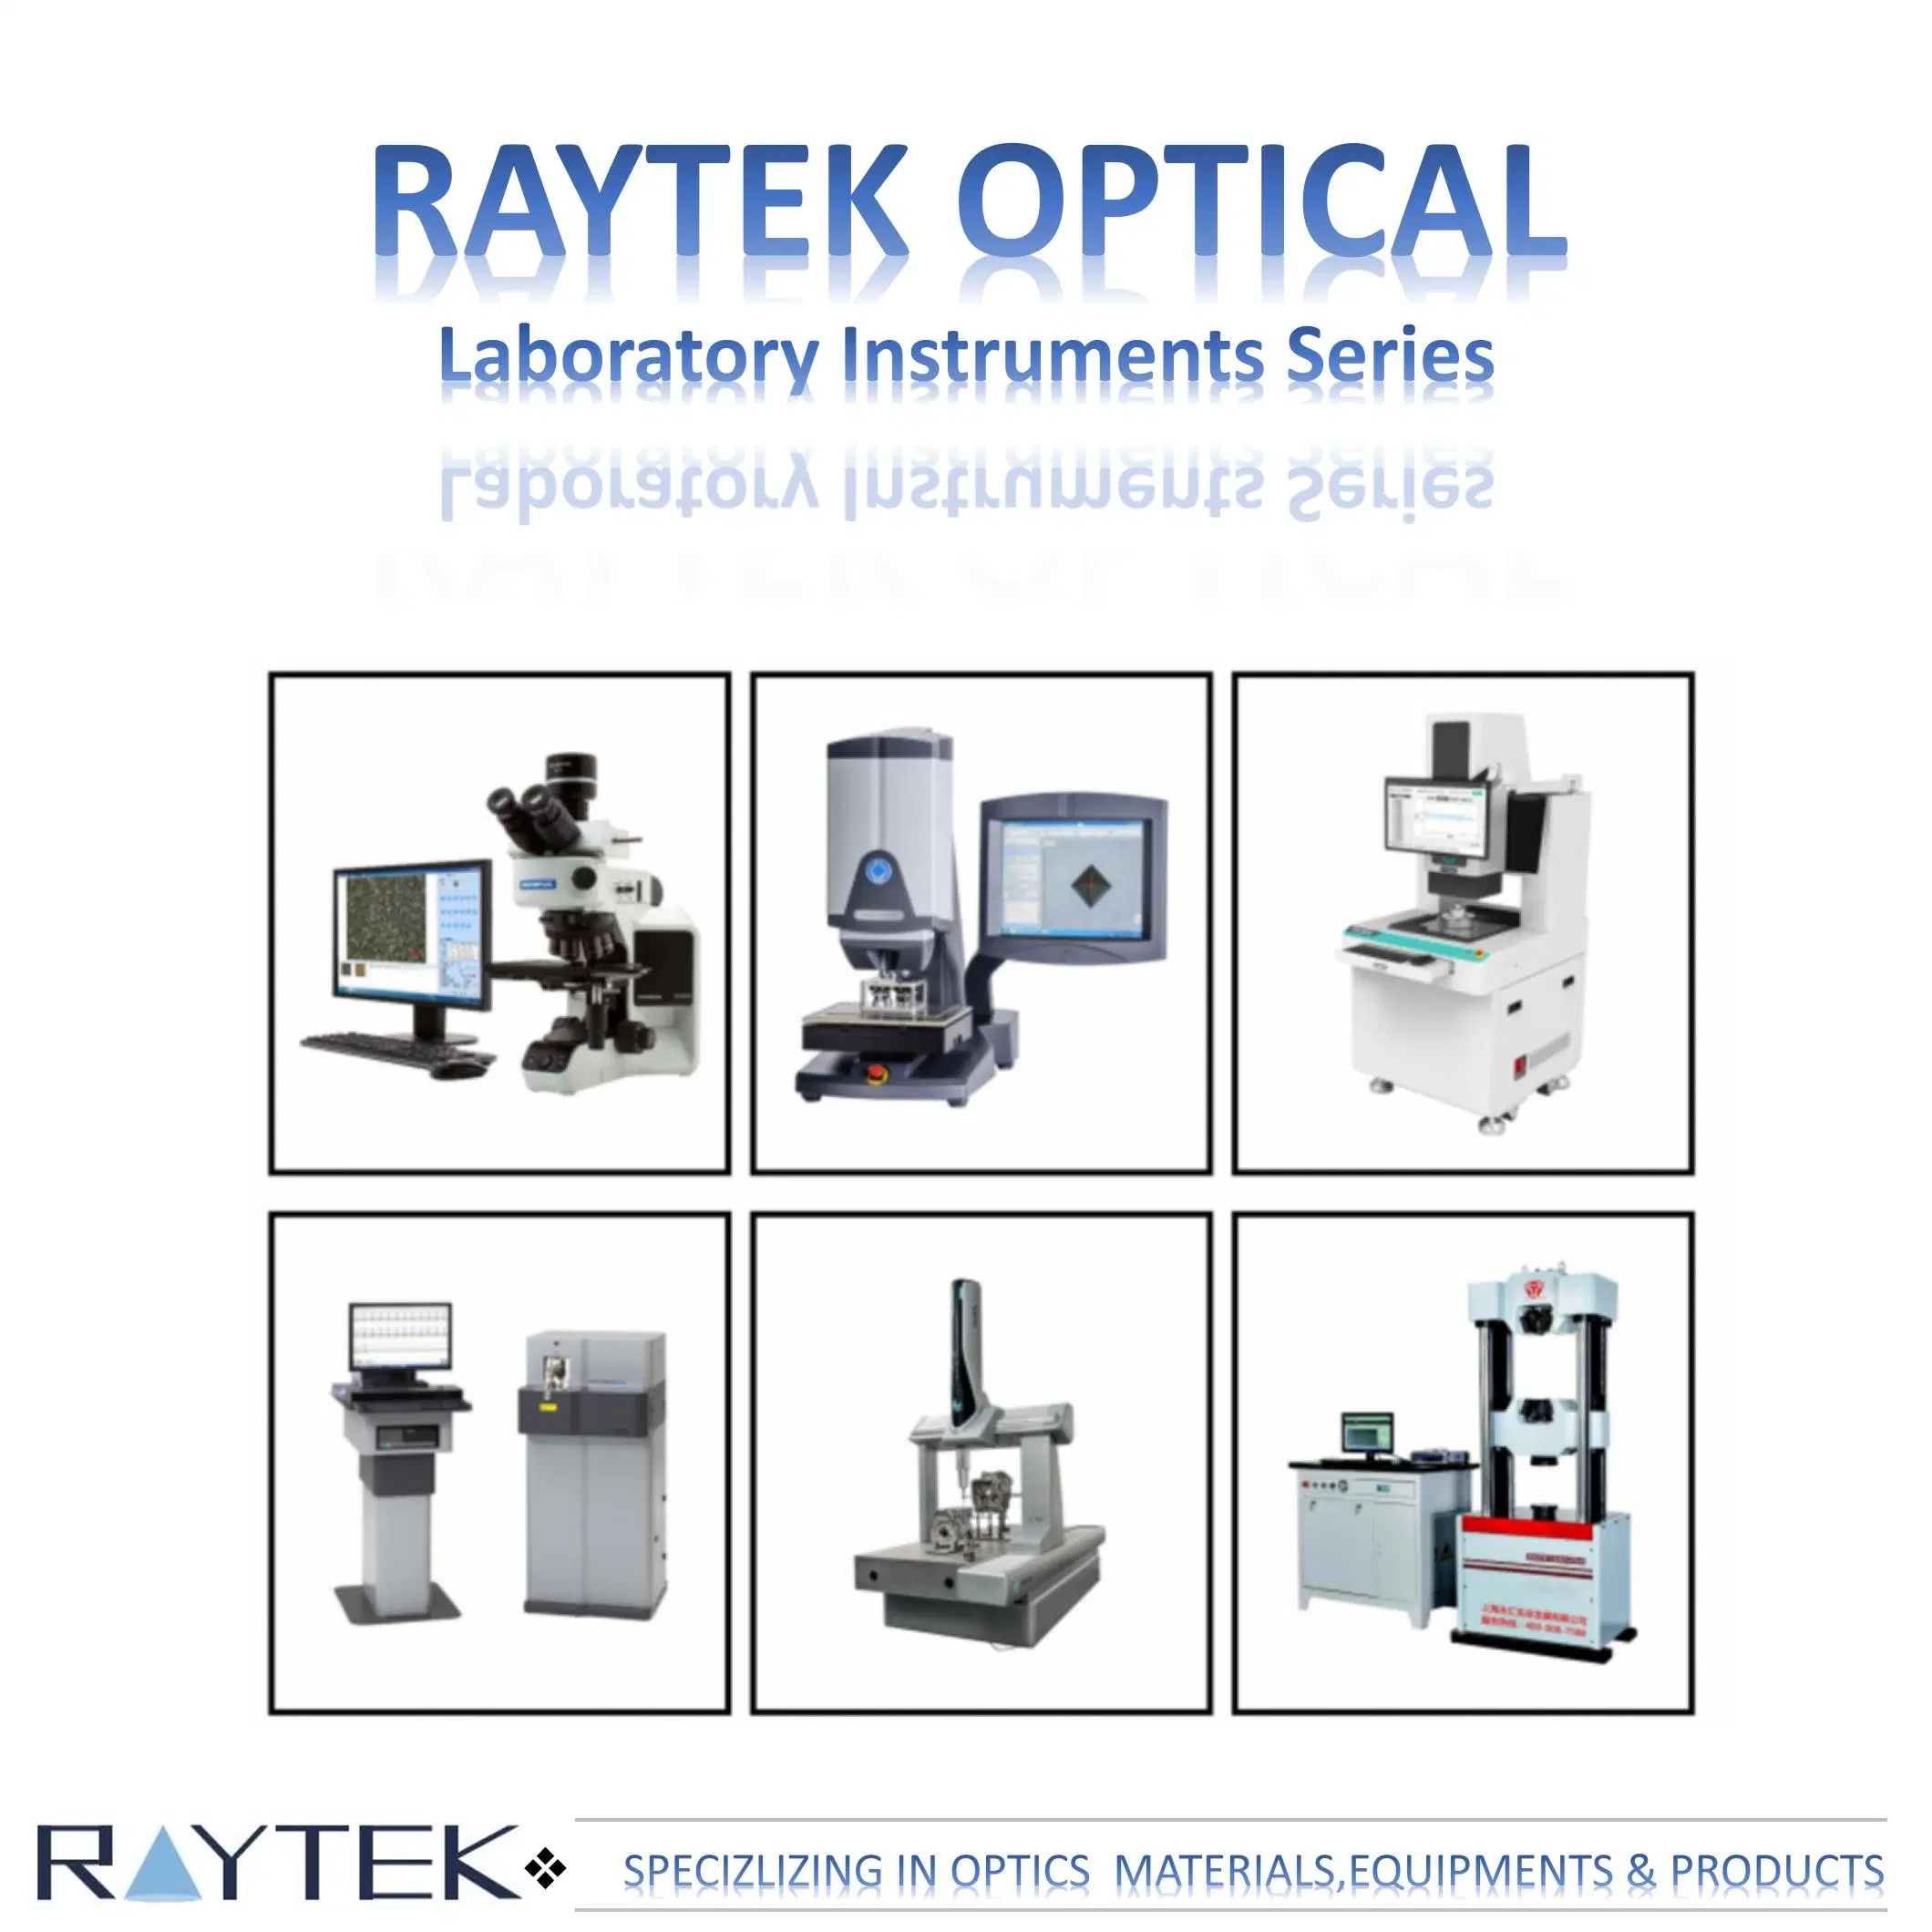 Optical Microscopes/Olympus Stereomicroscope/Polarizing Microscope/Metallographic Microscope